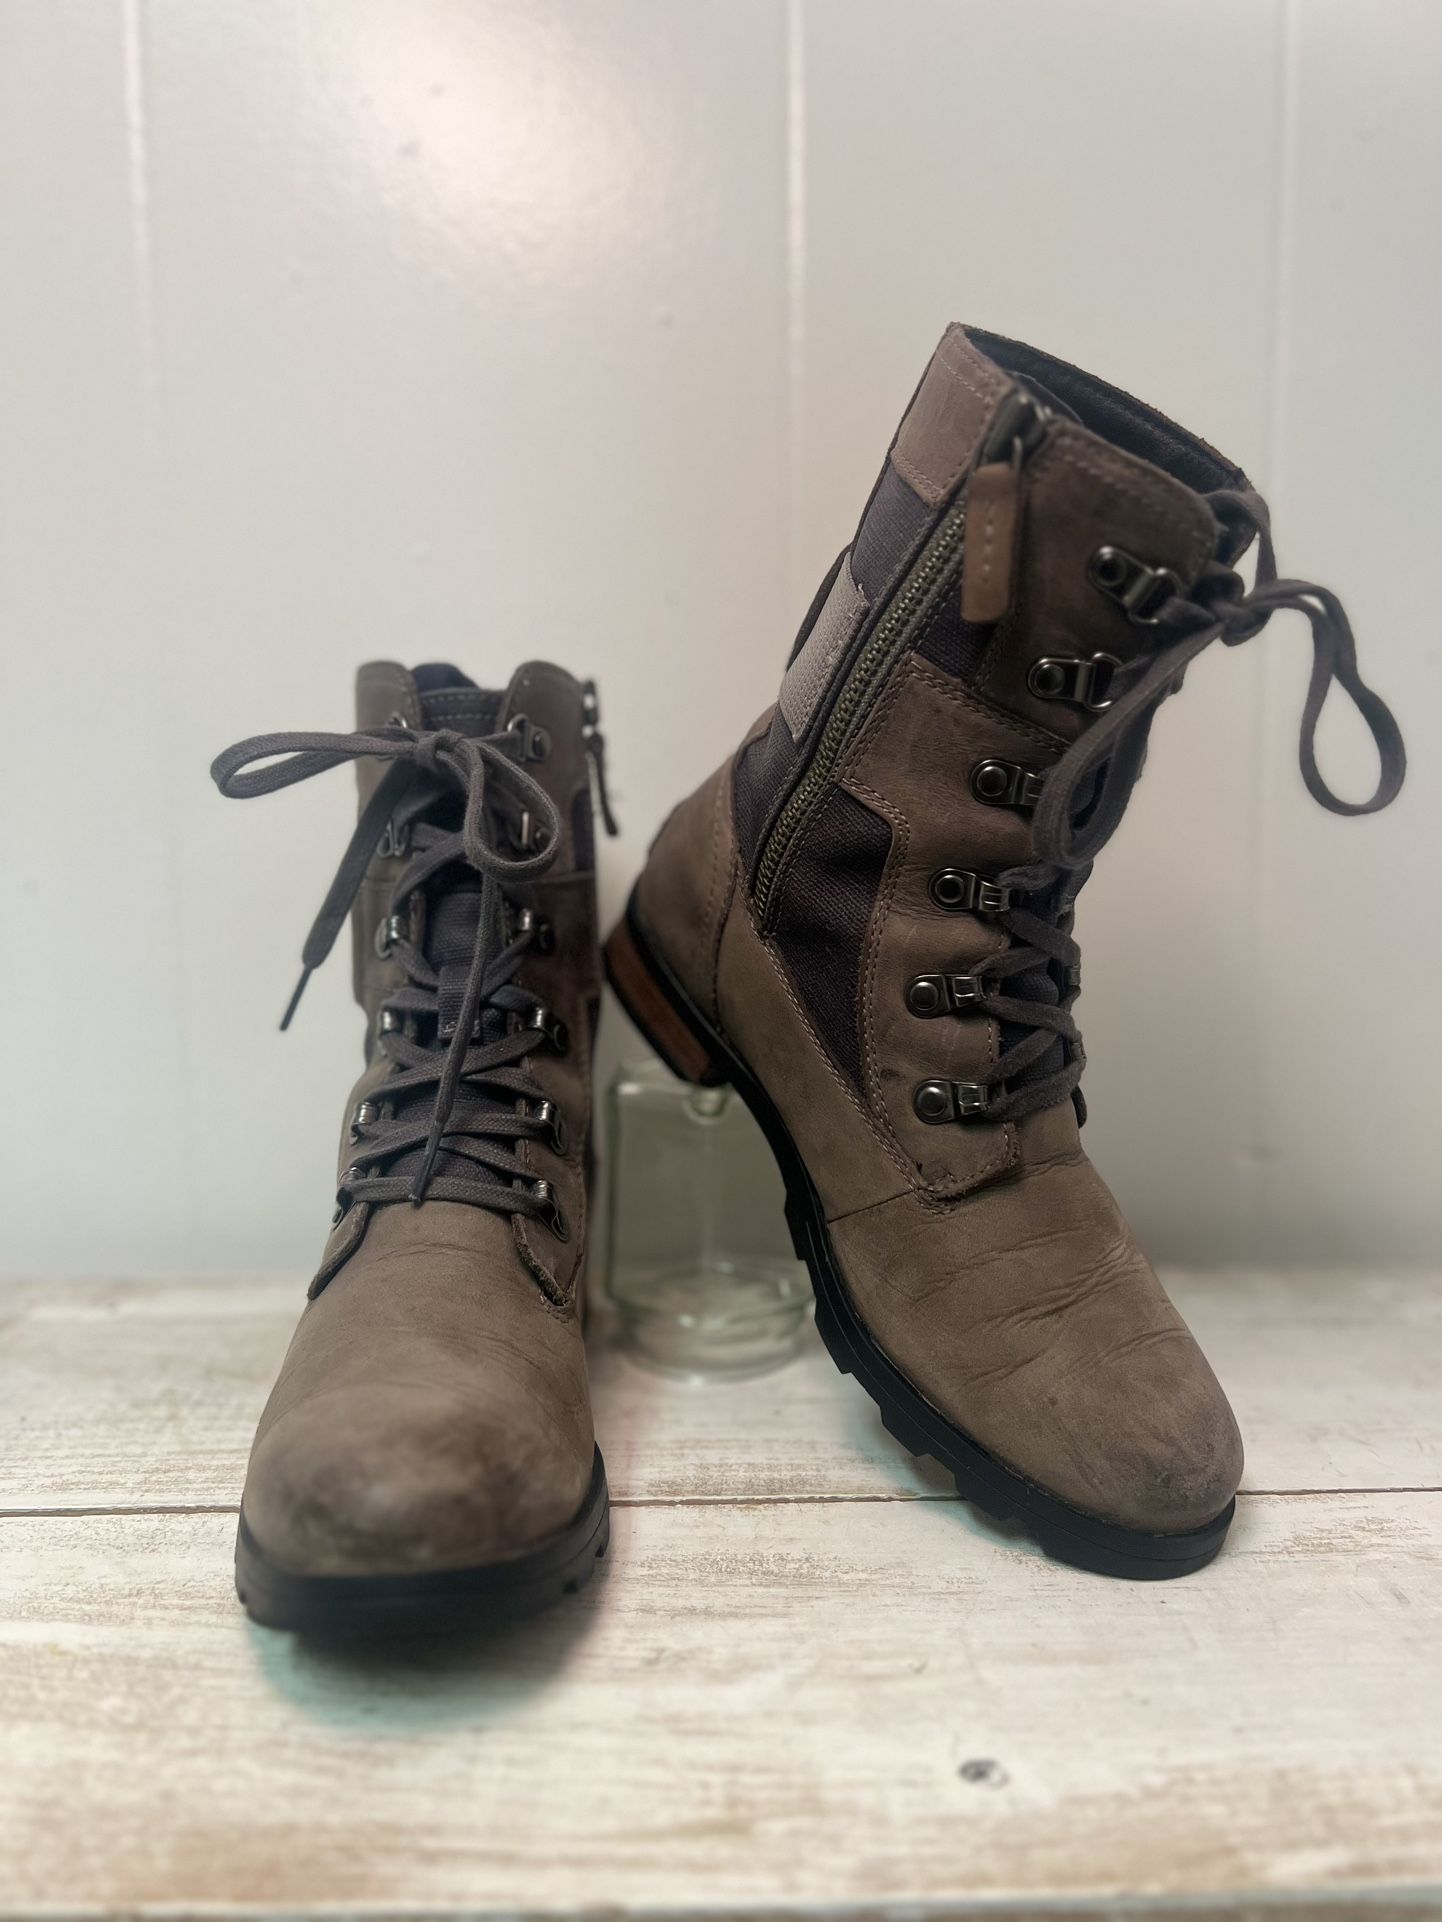 Sorel Emelie Conquest Boots 